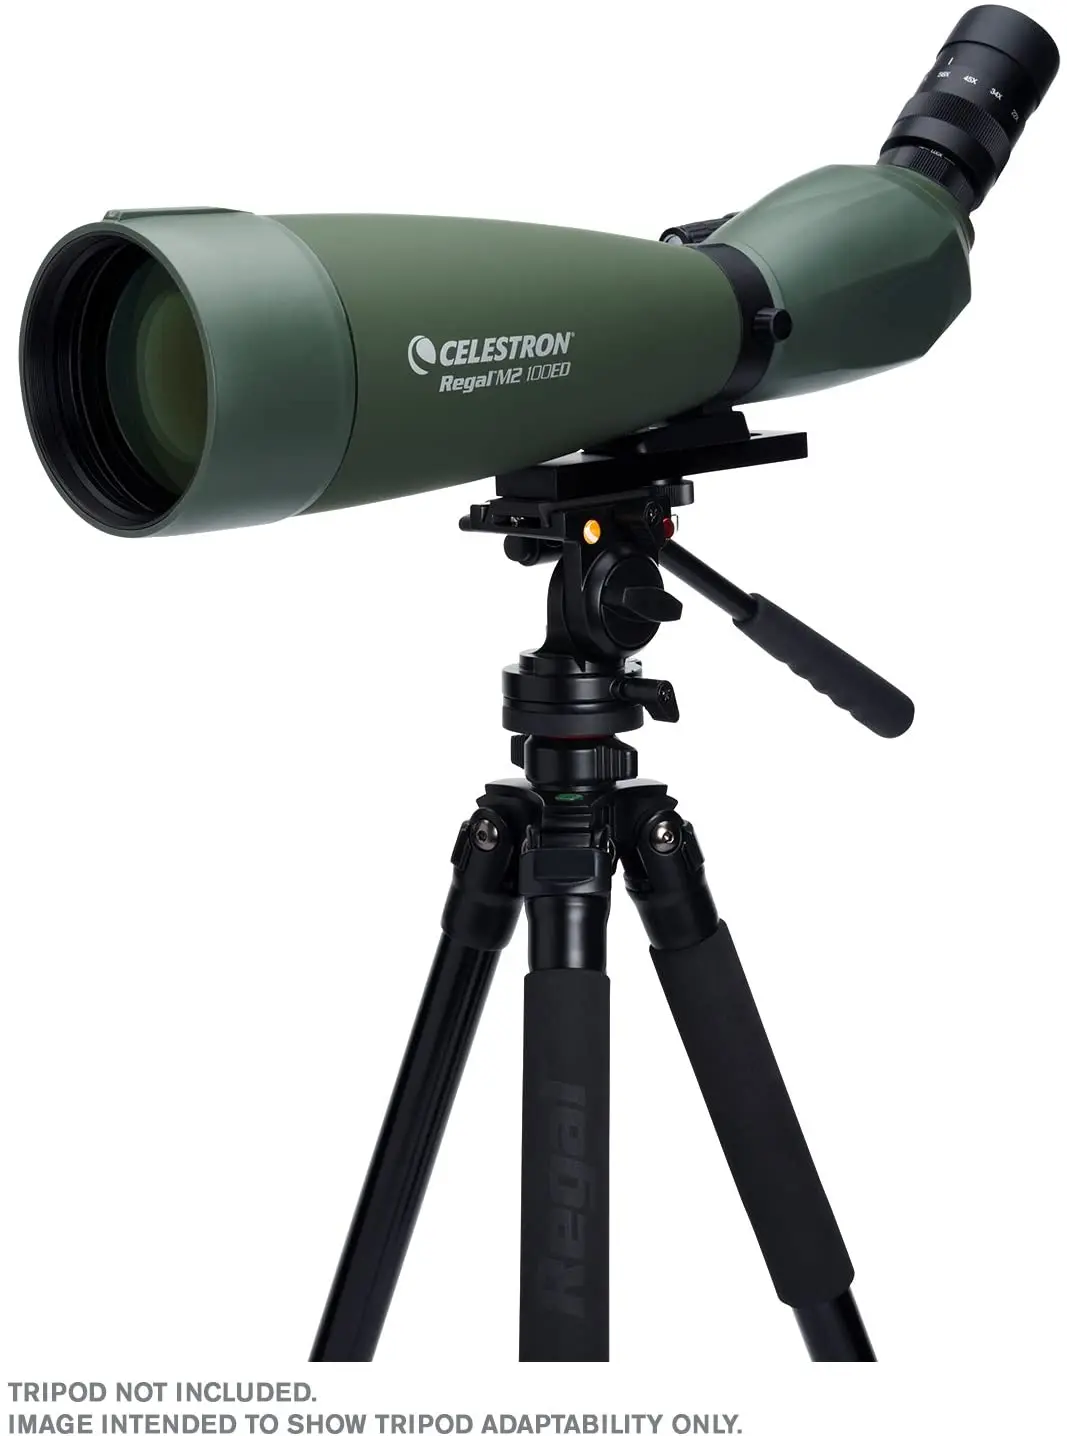 

Celestron Regal M2 65ED 80ED 100ED Fully Multi-Coated Optics ED Objective Lens for Bird Watching, Hunting 22-67x Zoom Lens